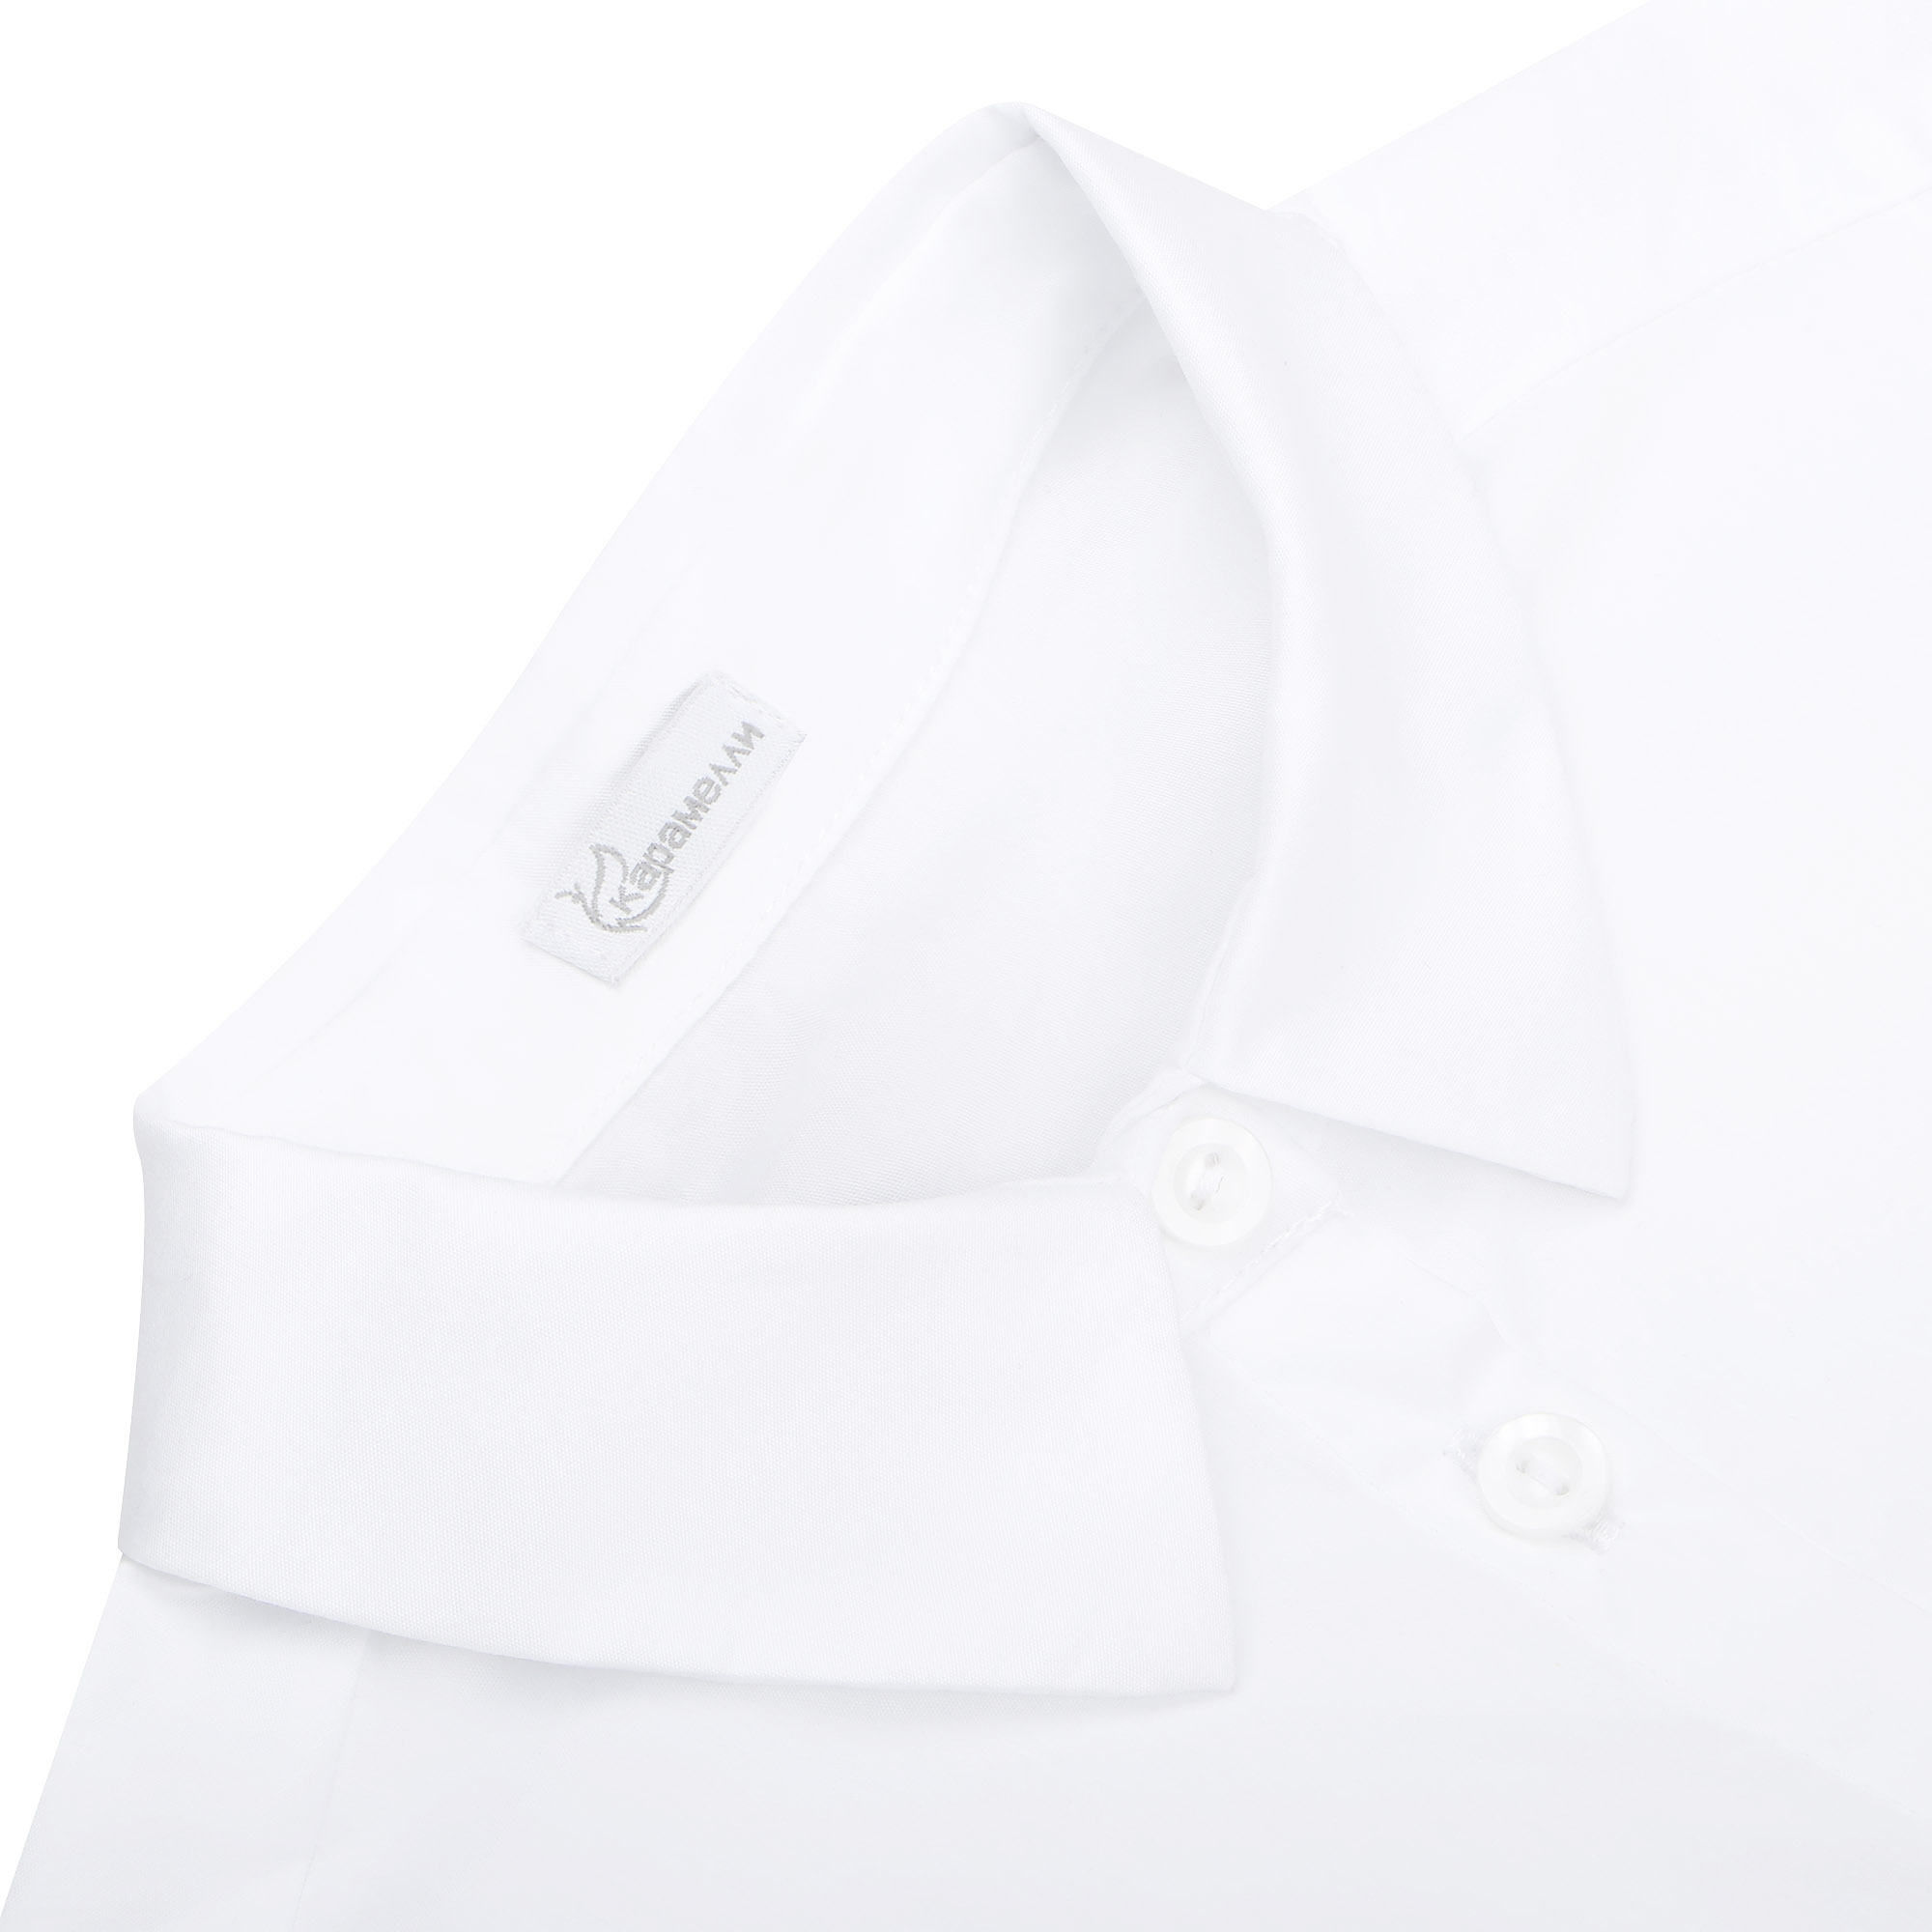 Блузка школьная КАРАМЕЛЛИ О74165 белая 158, цвет белый, размер 158 - фото 5